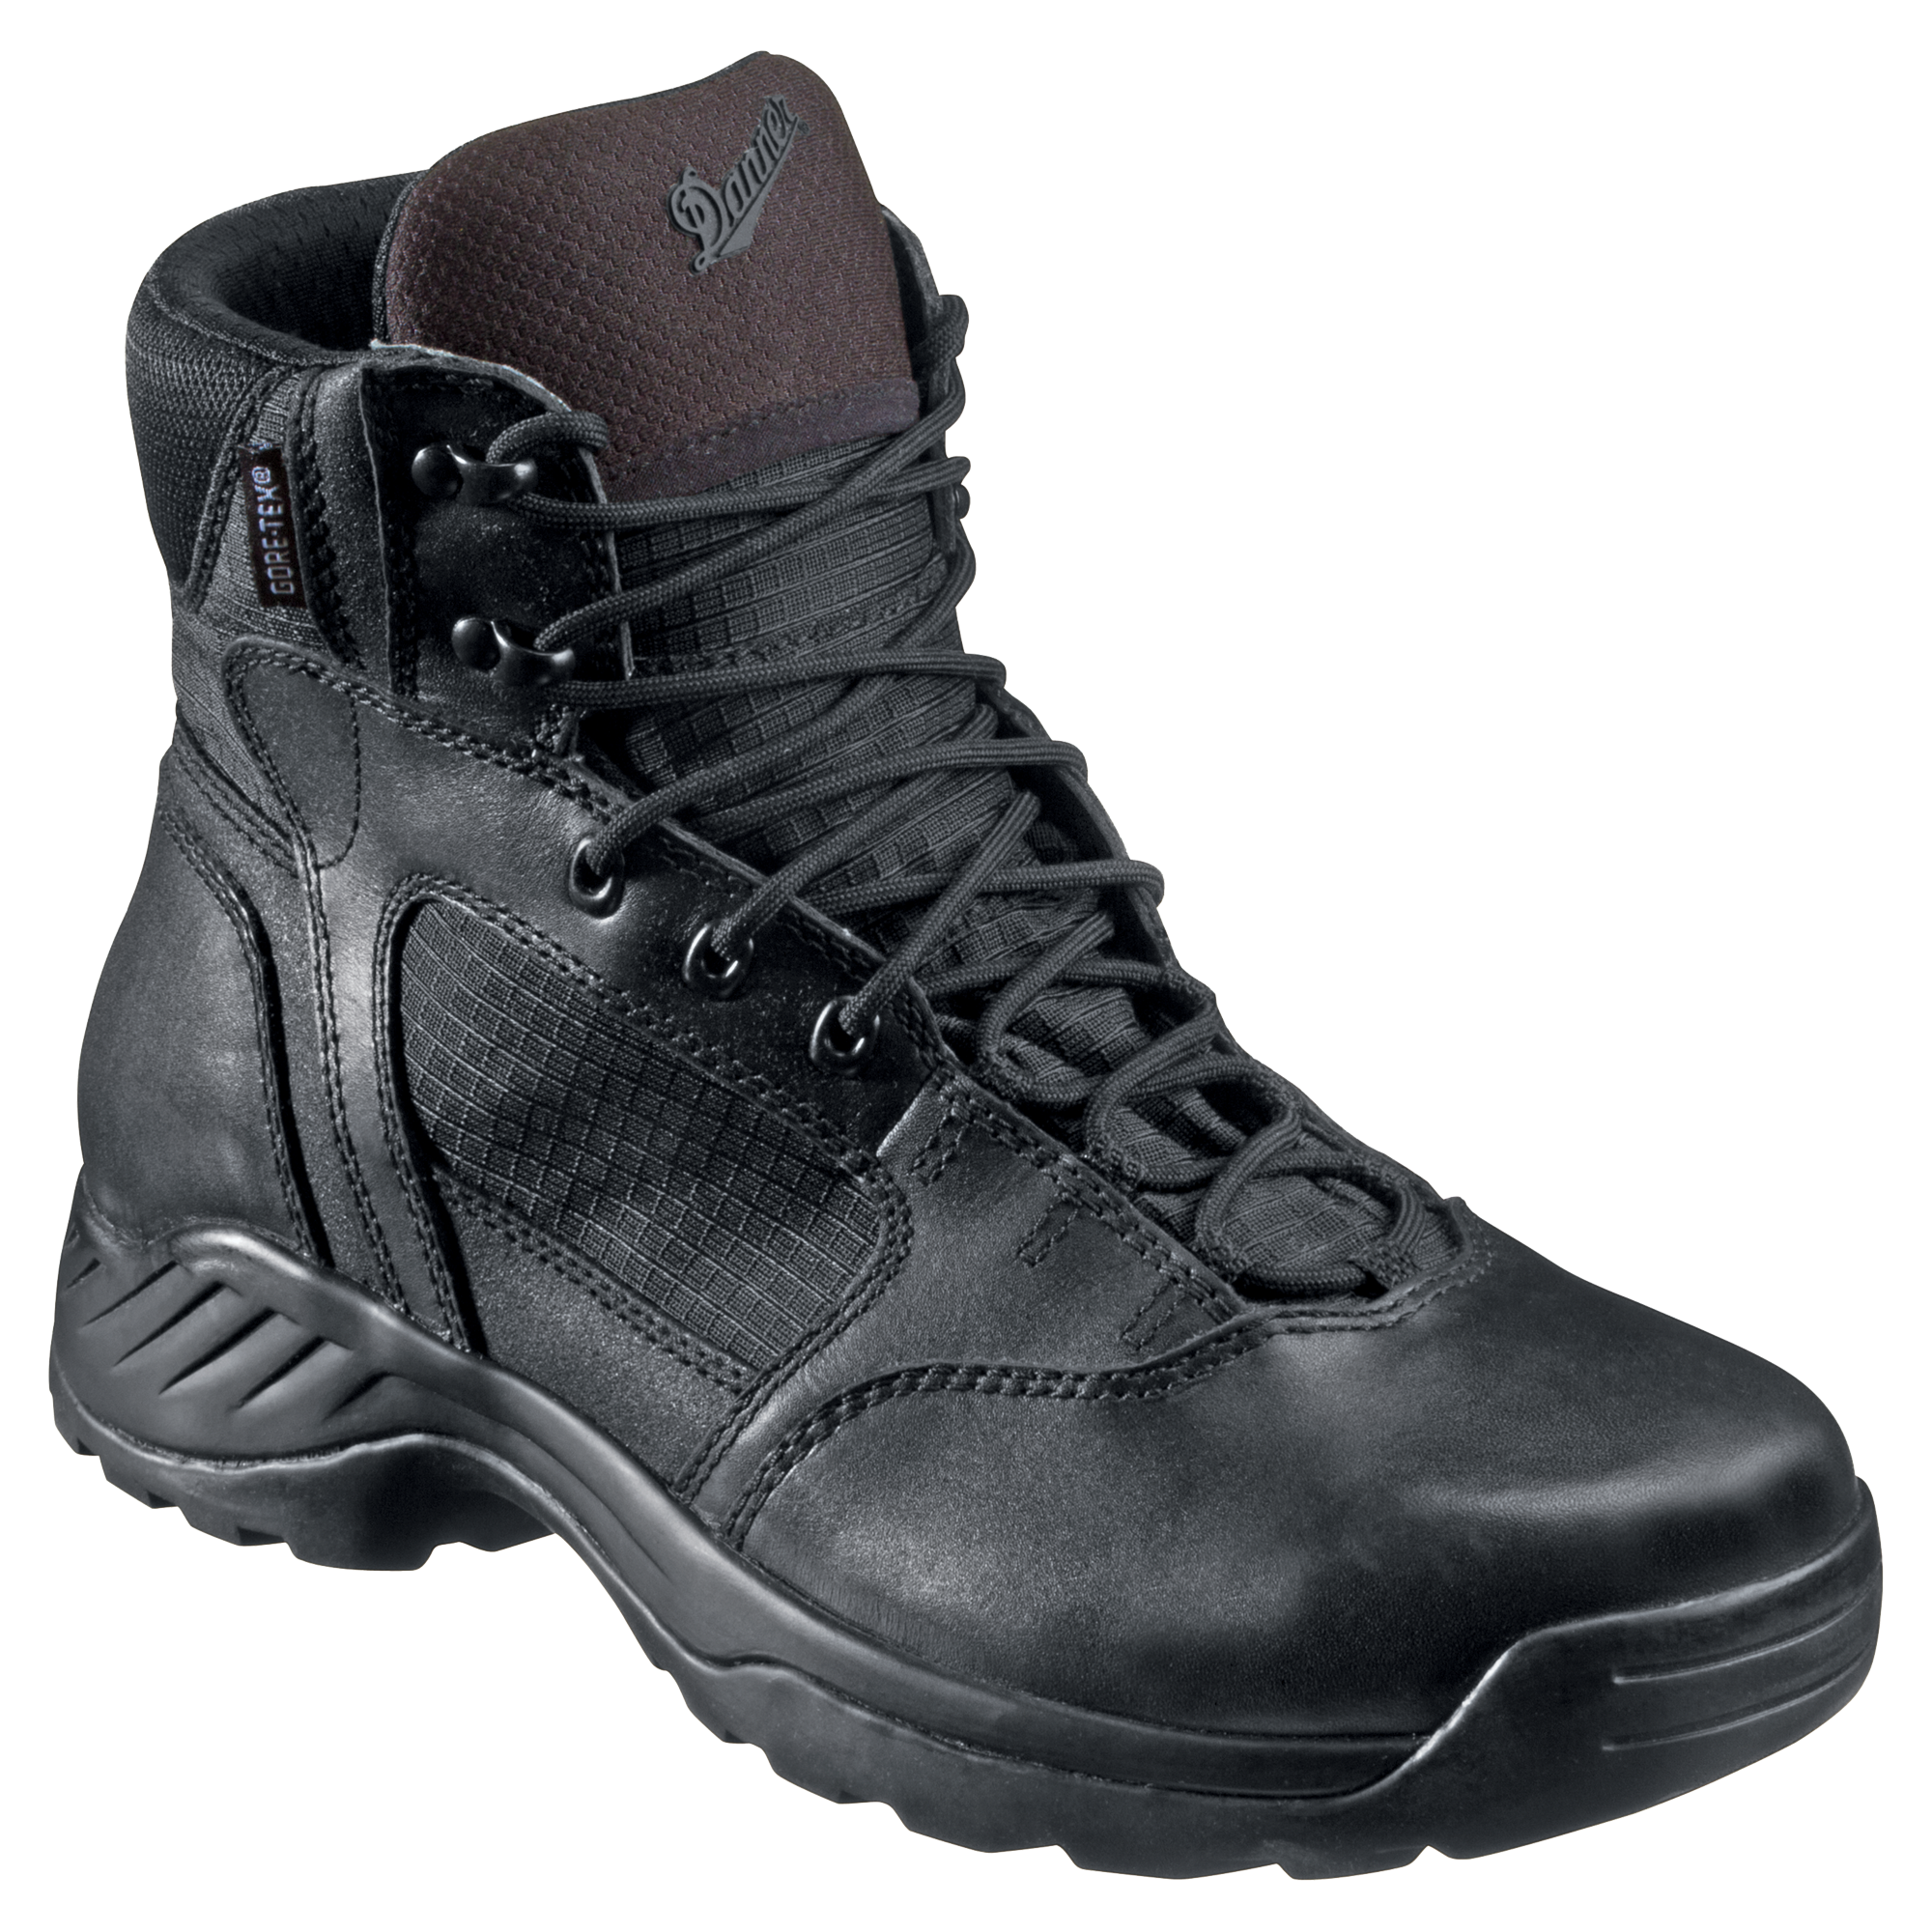 Danner Kinetic Side-Zip GORE-TEX Work Boots for Men - Black - 10.5M